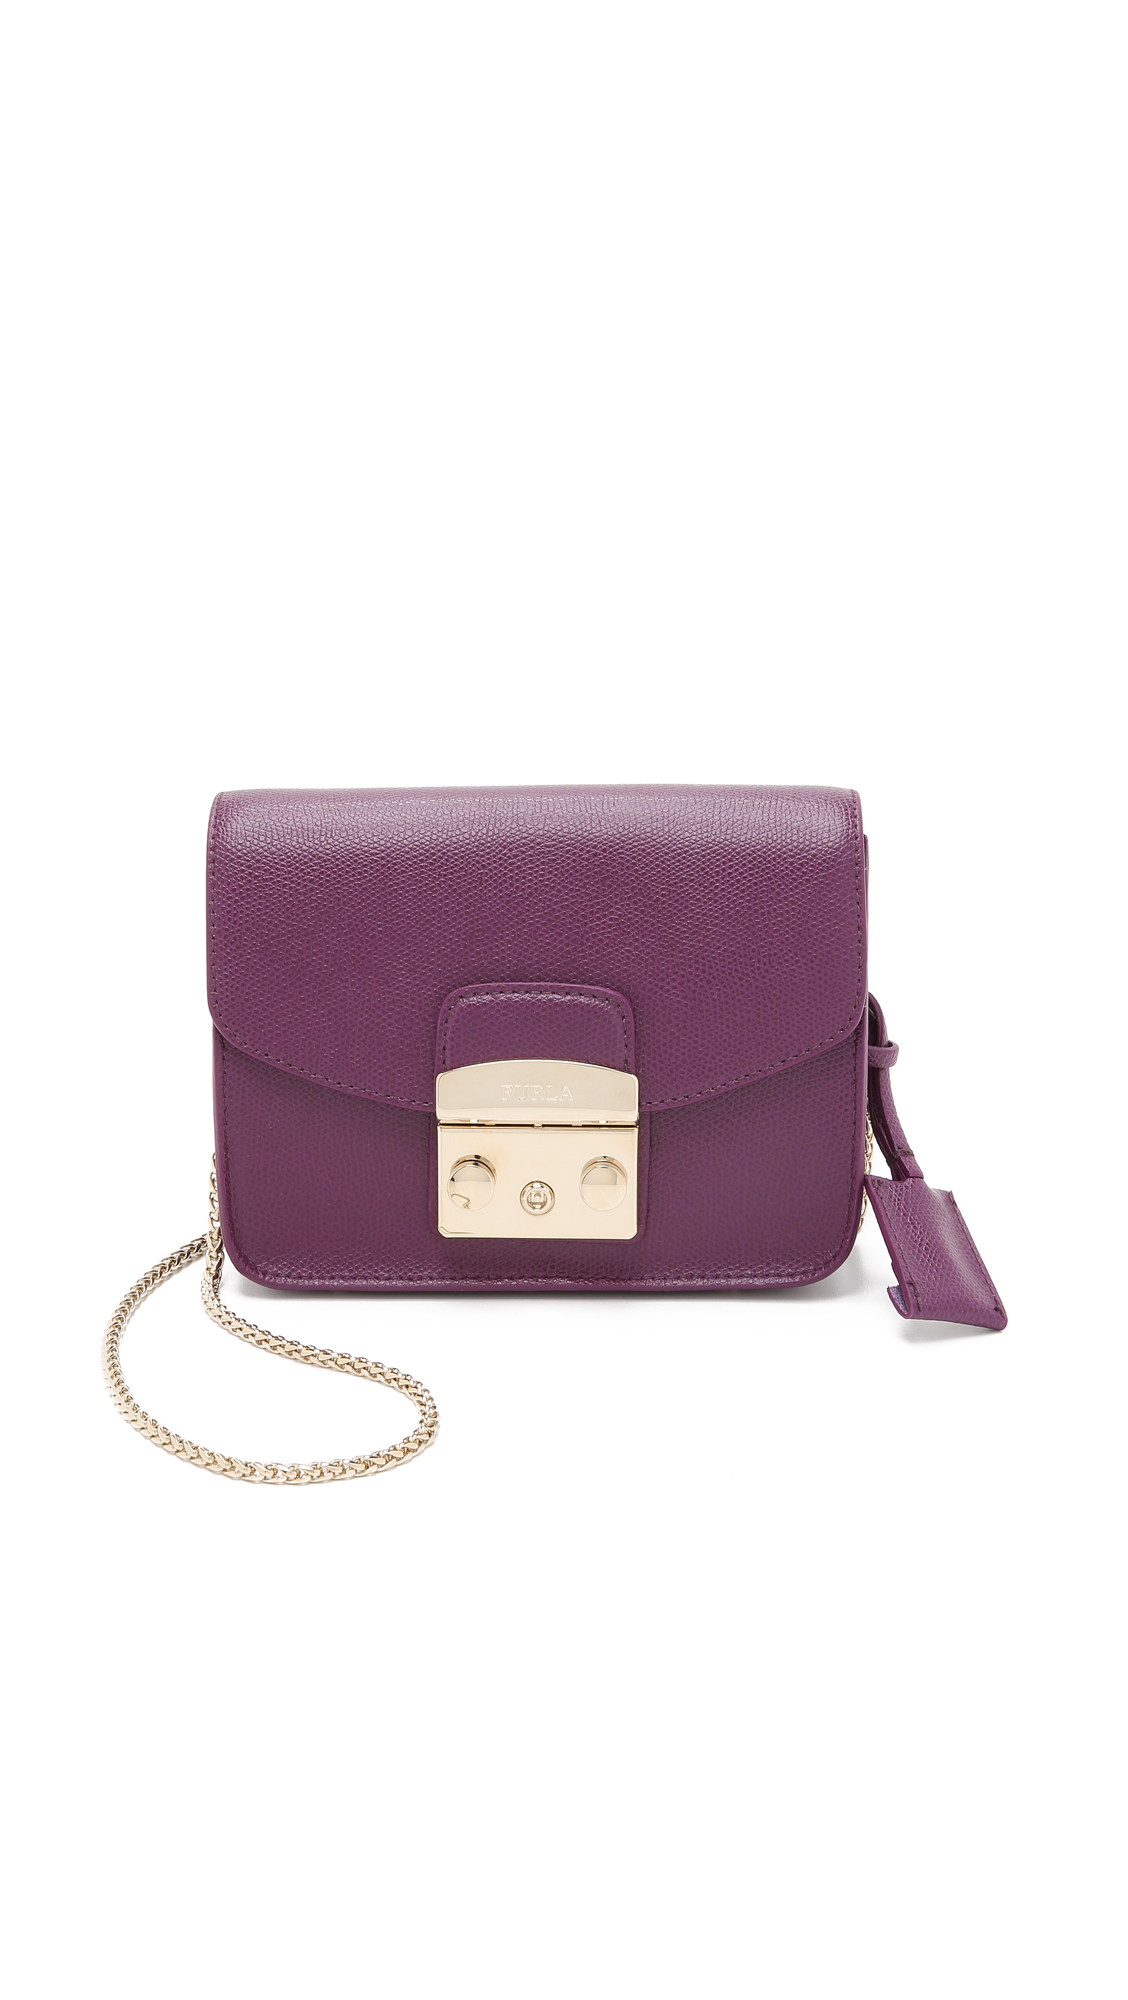 Lyst - Furla Metropolis Mini Cross Body Bag - Aubergine in Purple